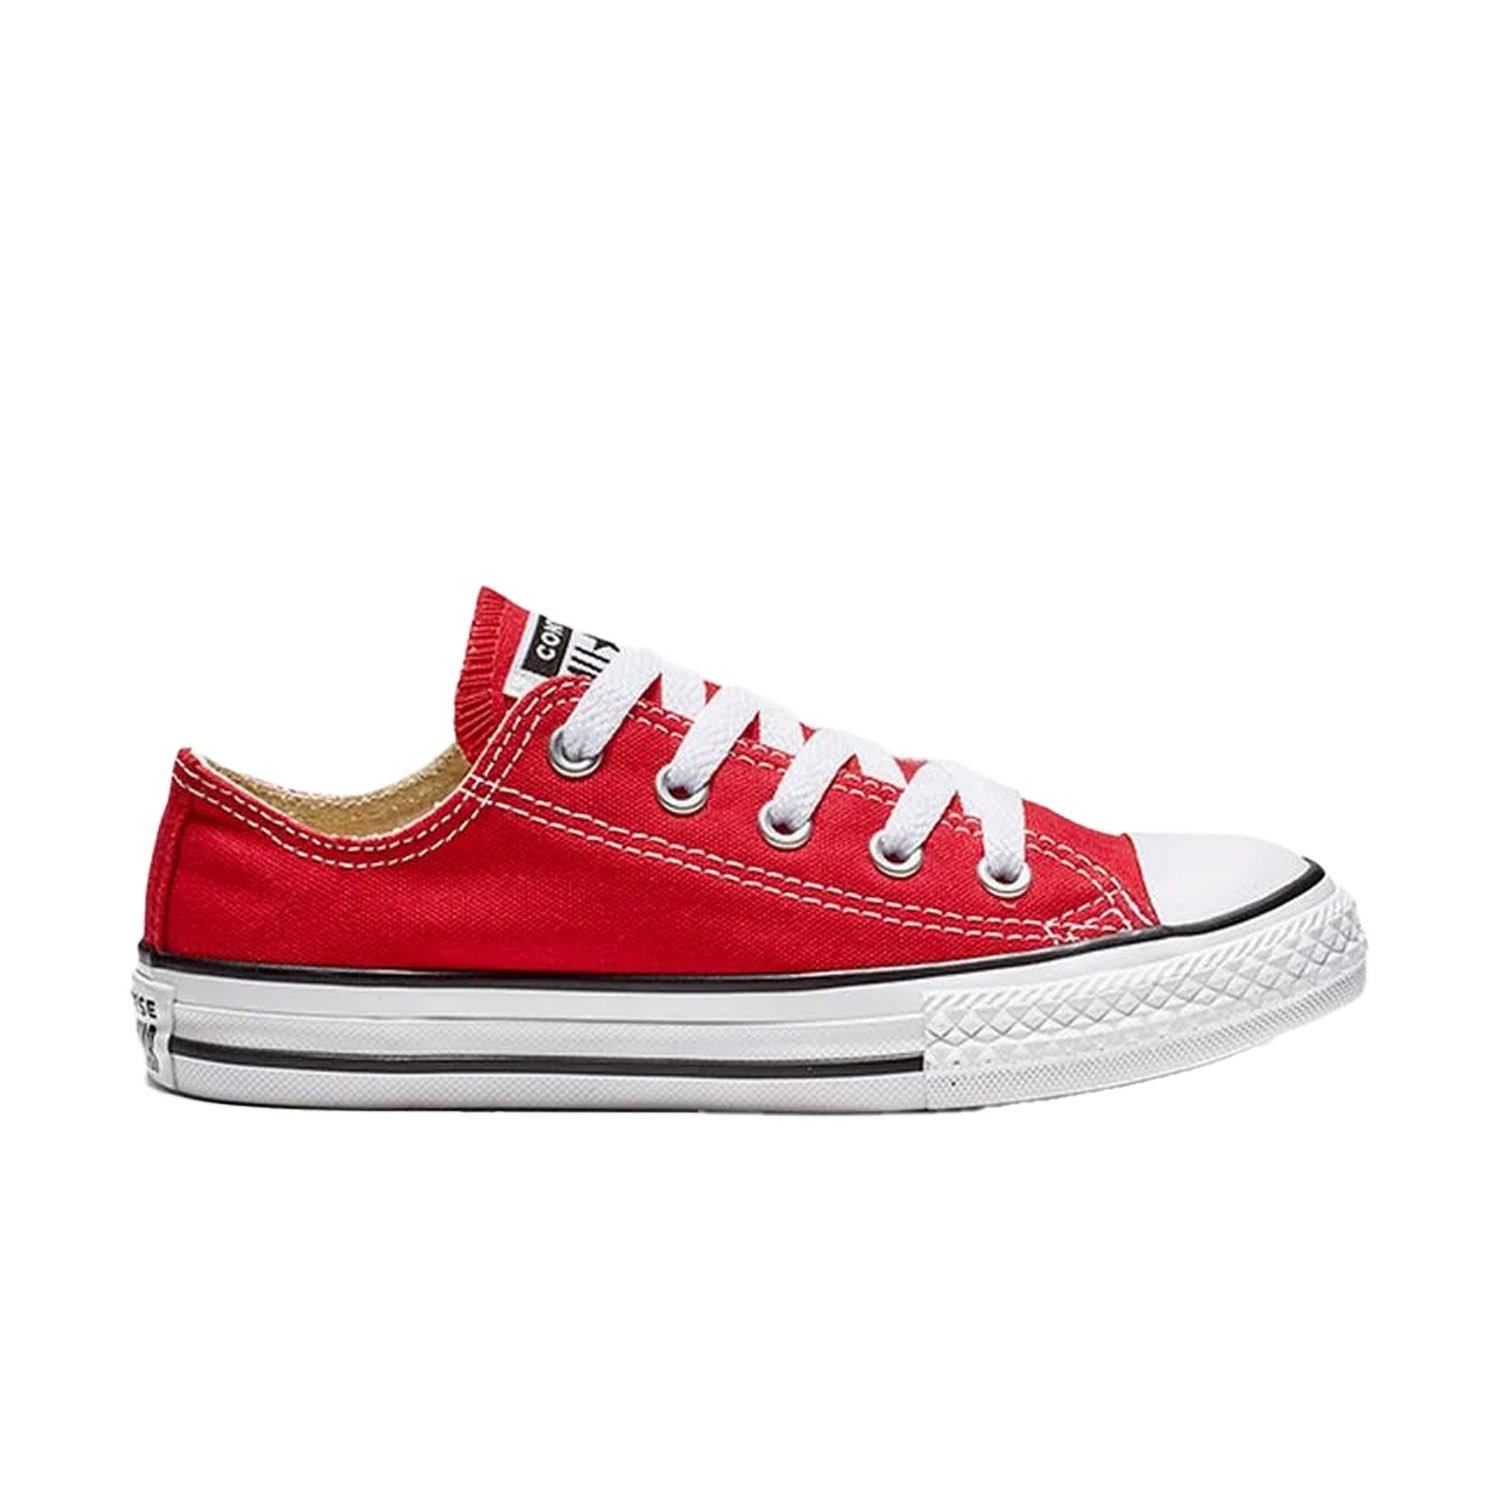 Converse Chuck Taylor All Star Classic Çocuk Ayakkabı - Kırmızı - 1